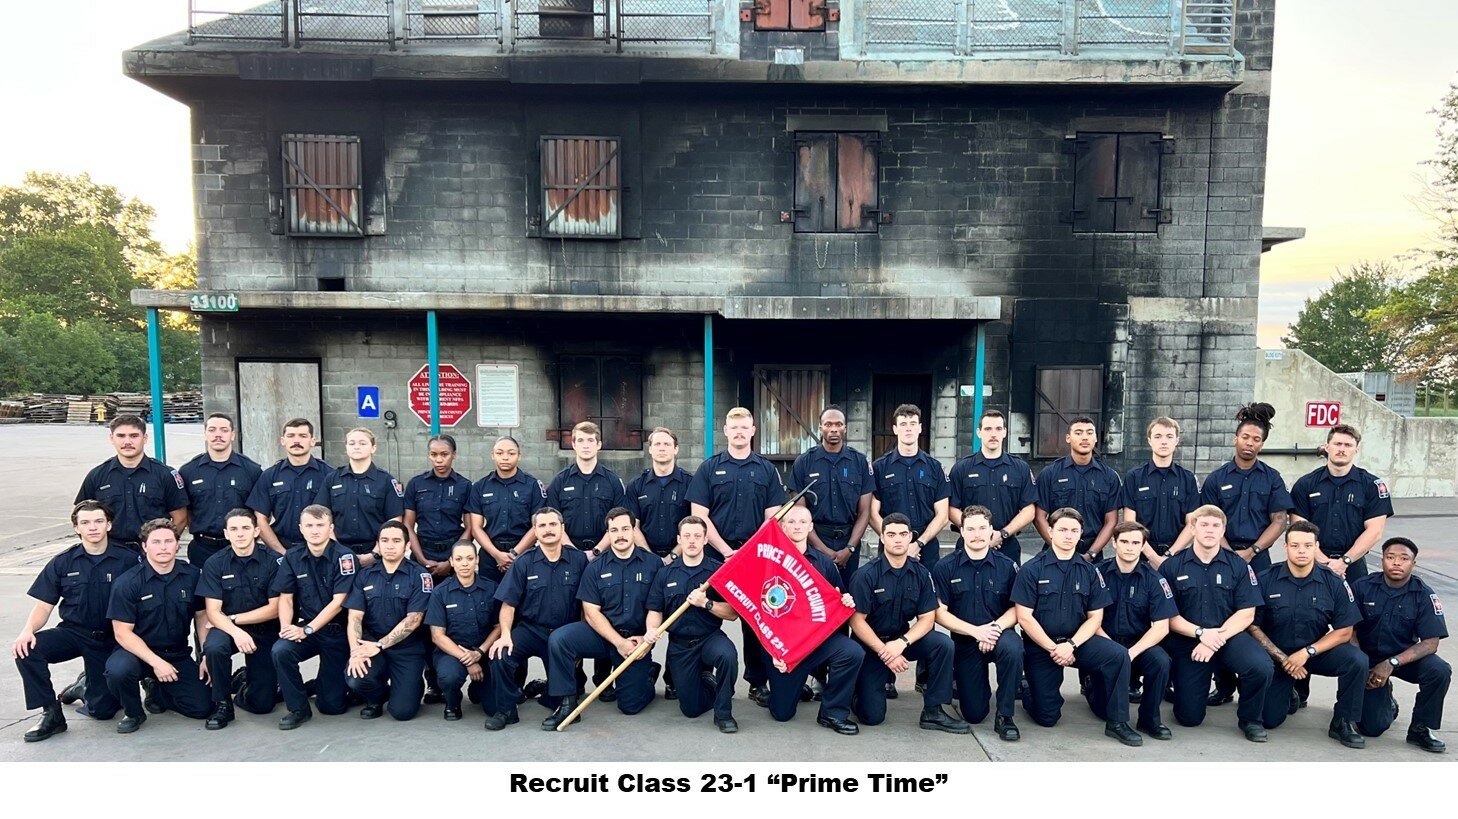 Prince William Fire & Rescue Recruit Class 2023-24